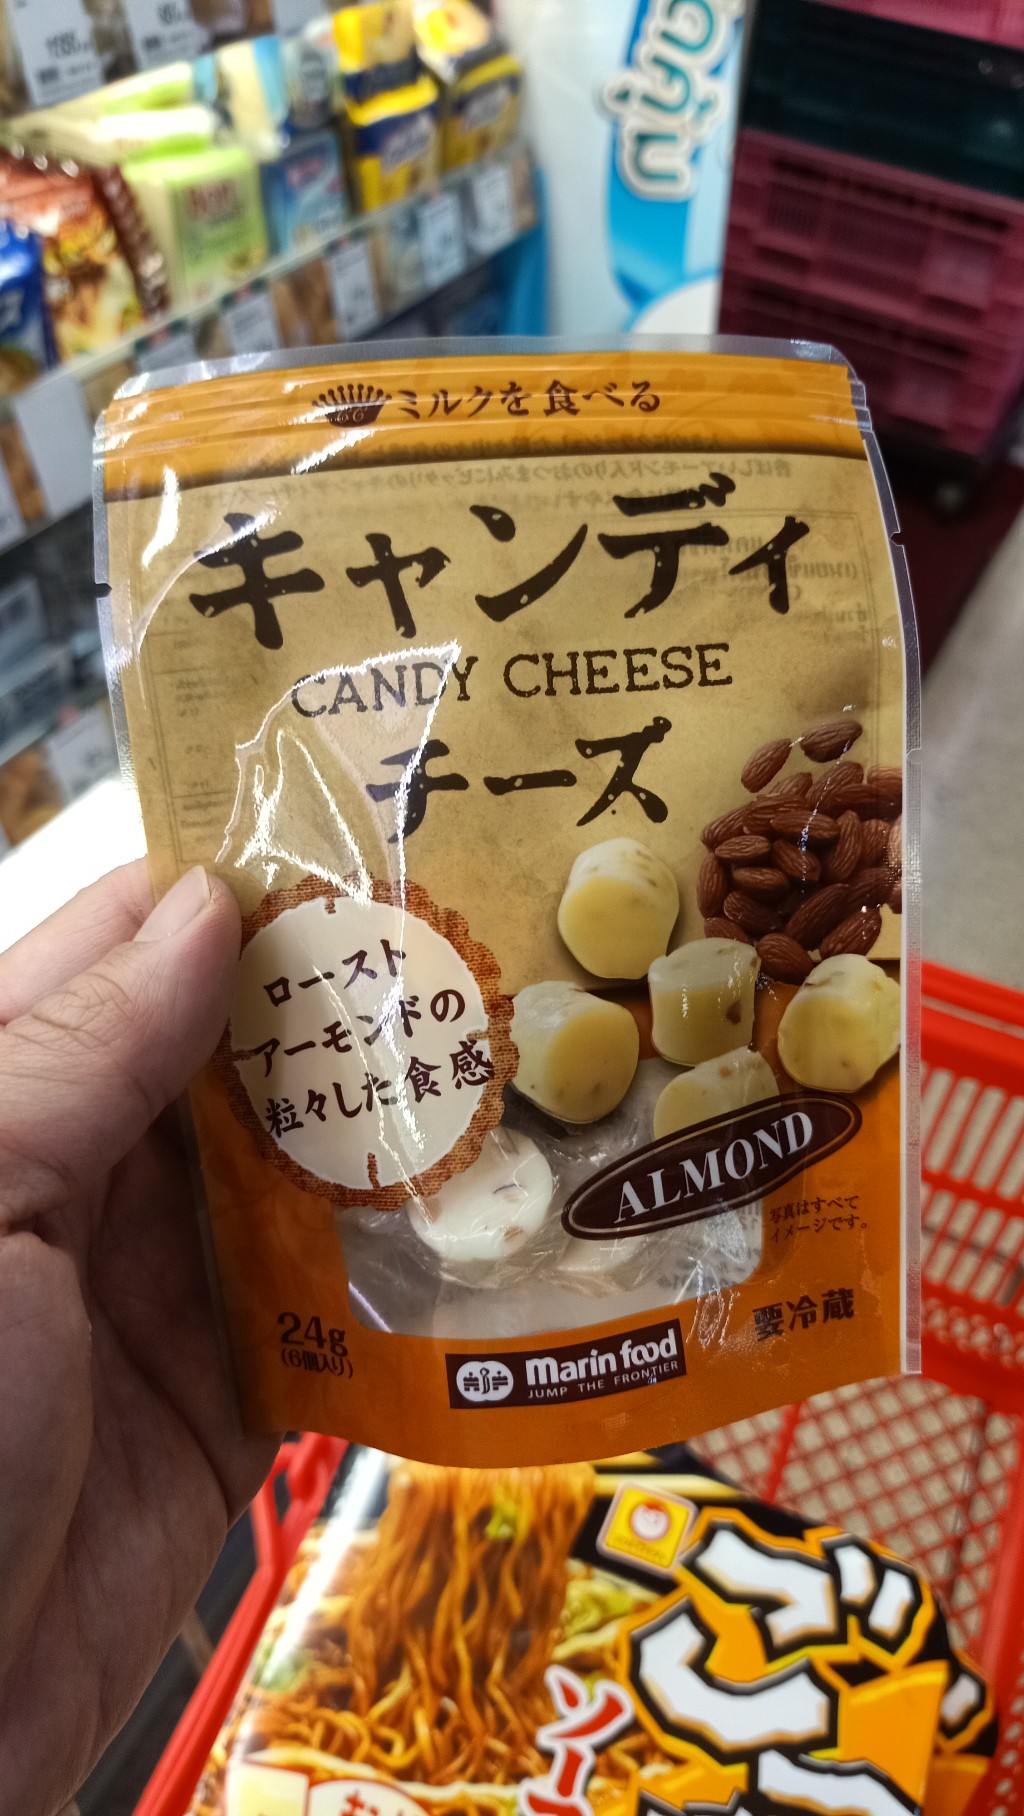 ecook ญี่ปุ่น ขนม แคนดี้ชีส อัลมอนด์ เนยแข็ง ชนิดโพรเซสชีส fuji marin food candy cheese almond 24g